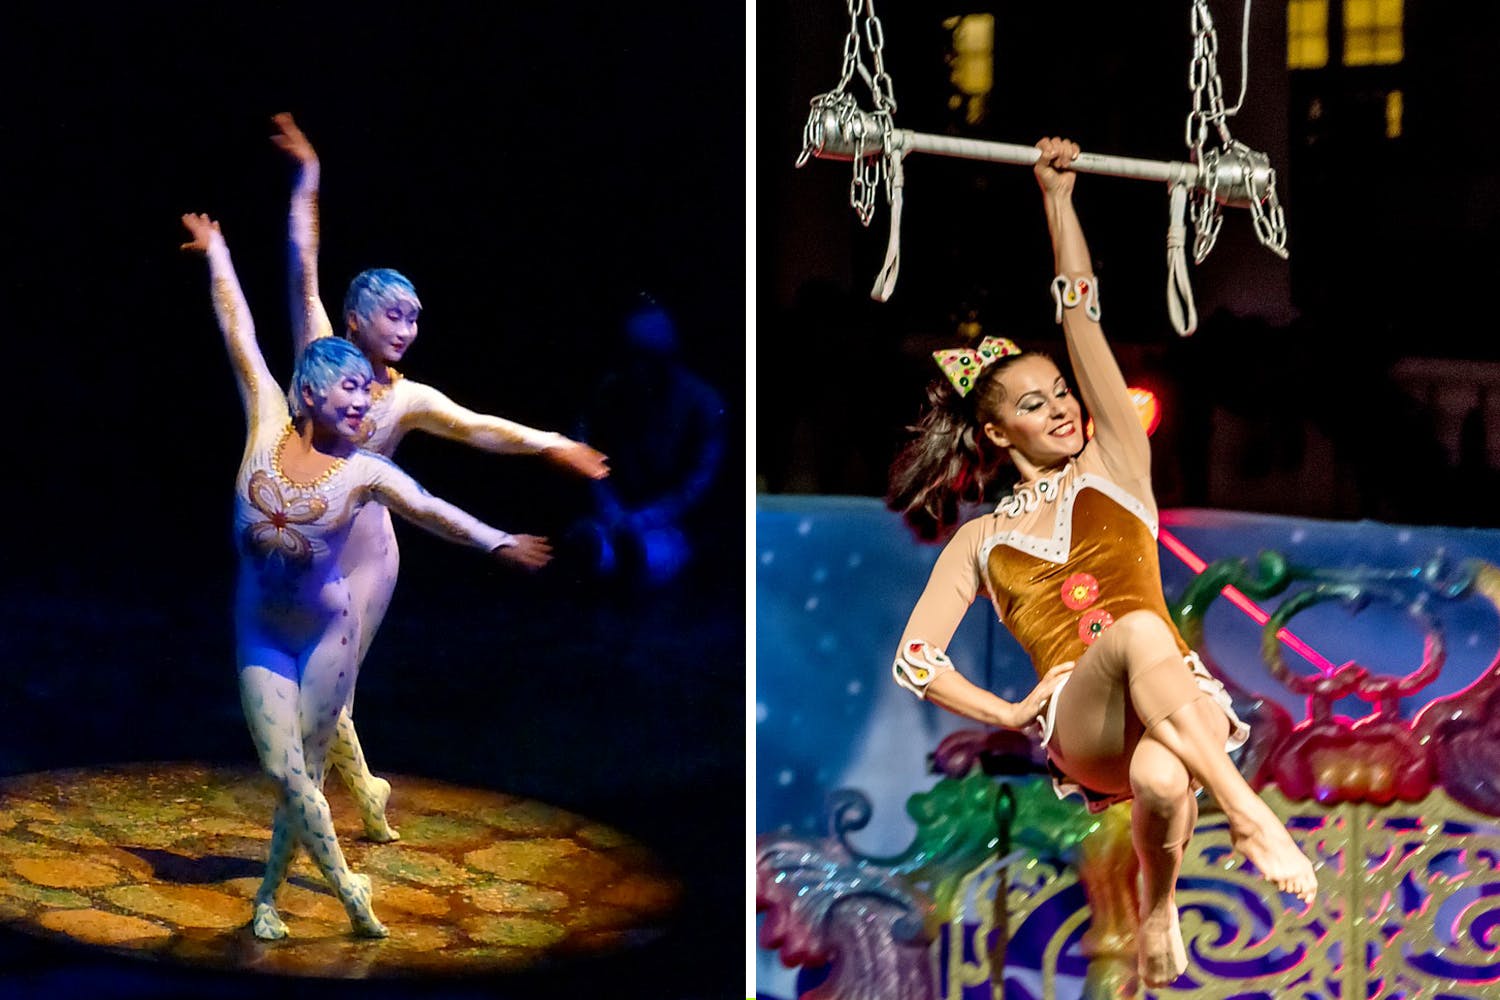 Performance,Performing arts,Entertainment,Dancer,Circus,Event,Acrobatics,Performance art,Dance,Public event